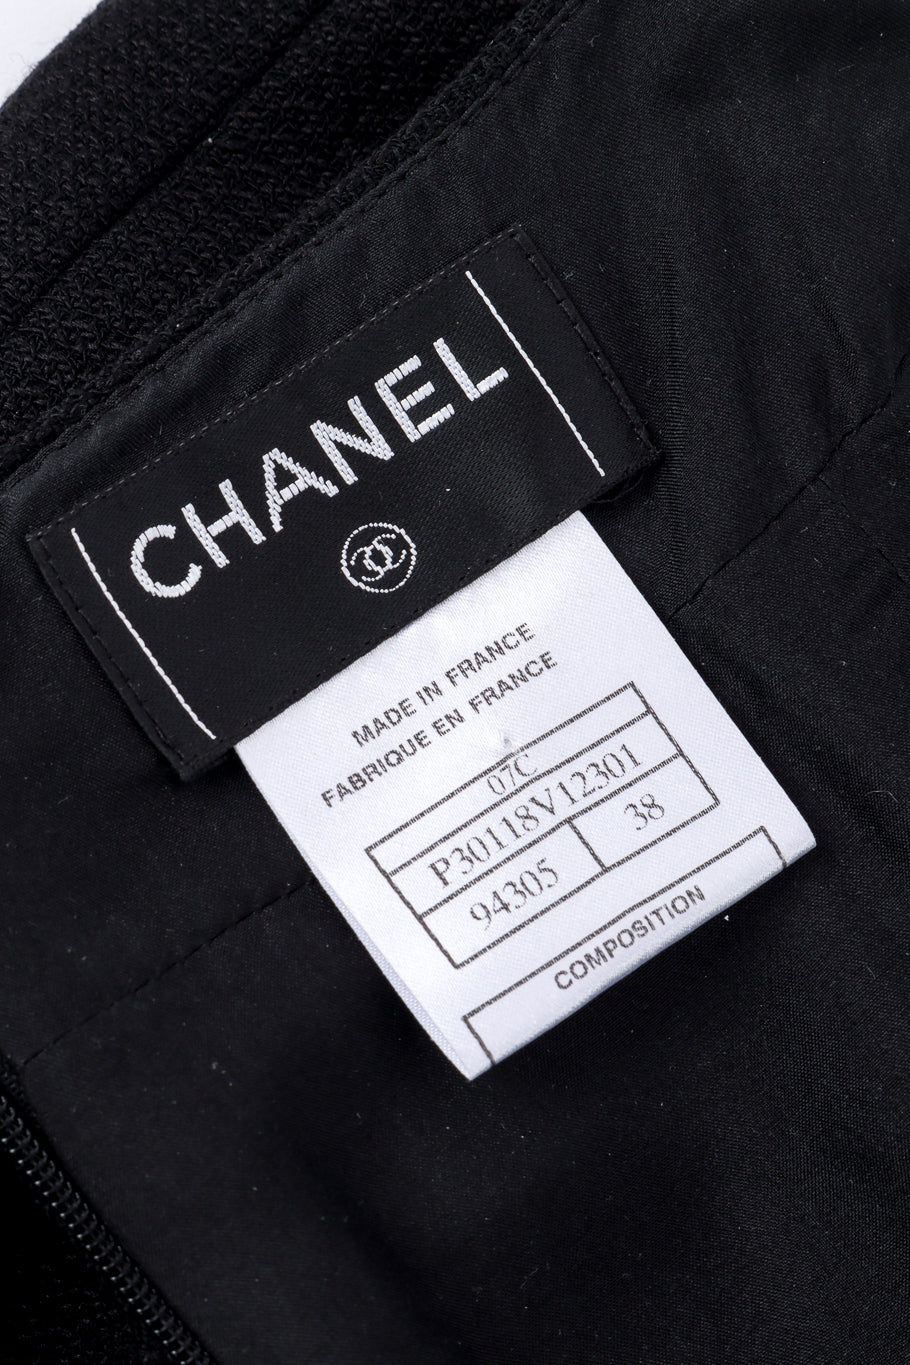 Chanel 2007C S/S Peplum Skirt Suit skirt signature label @recessla